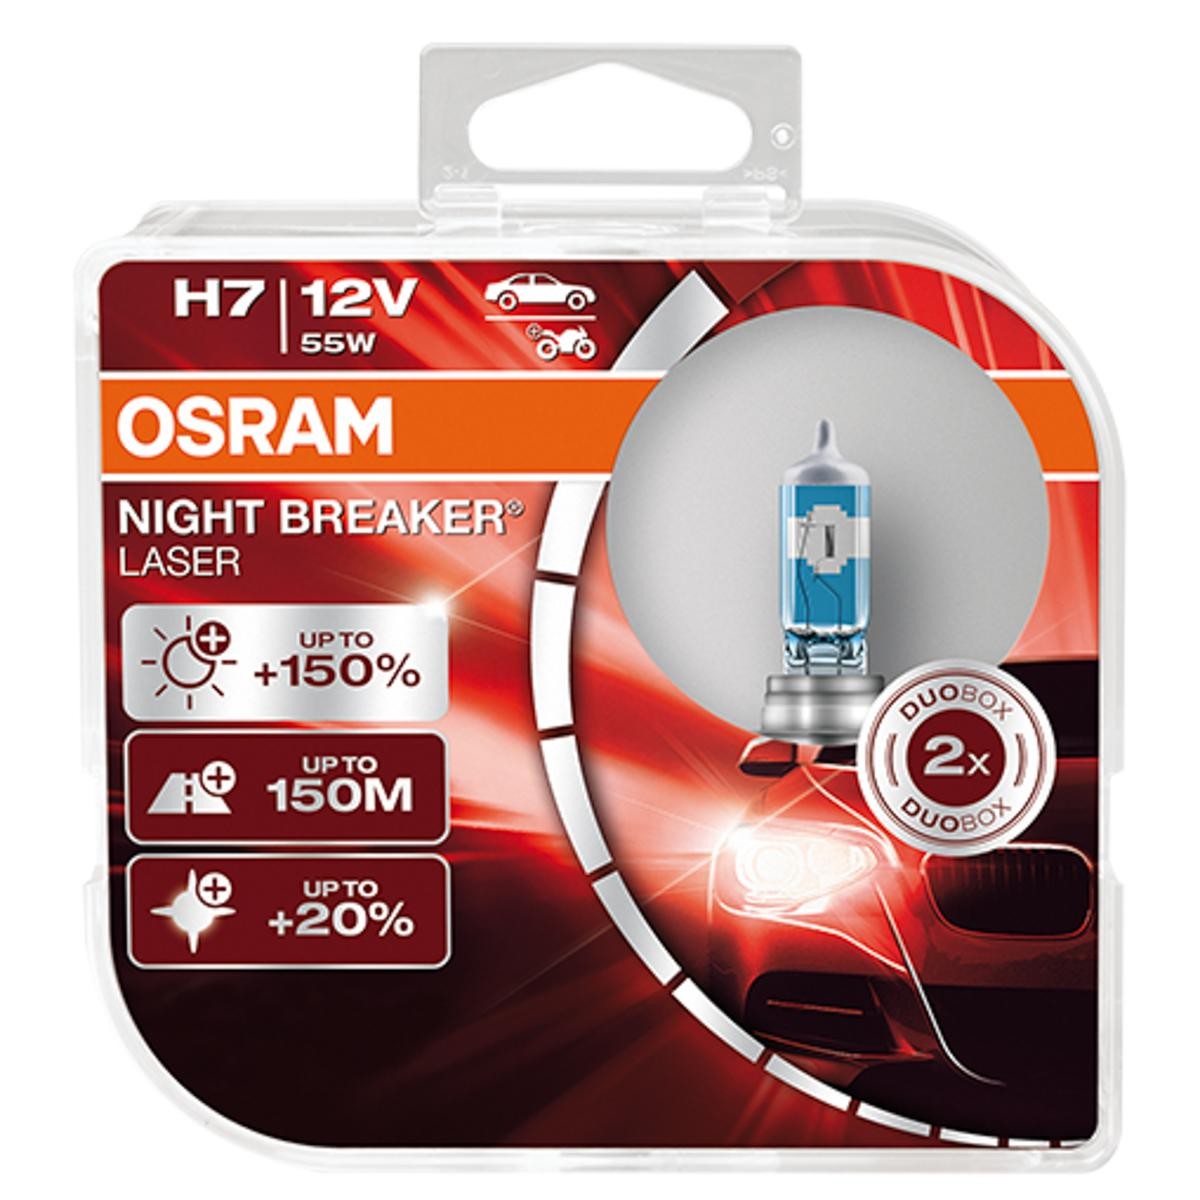 64210NL-HCB OSRAM NIGHT BREAKER LASER next Generation H7 12V 55W 4200K  Halogen Glühlampe, Fernscheinwerfer